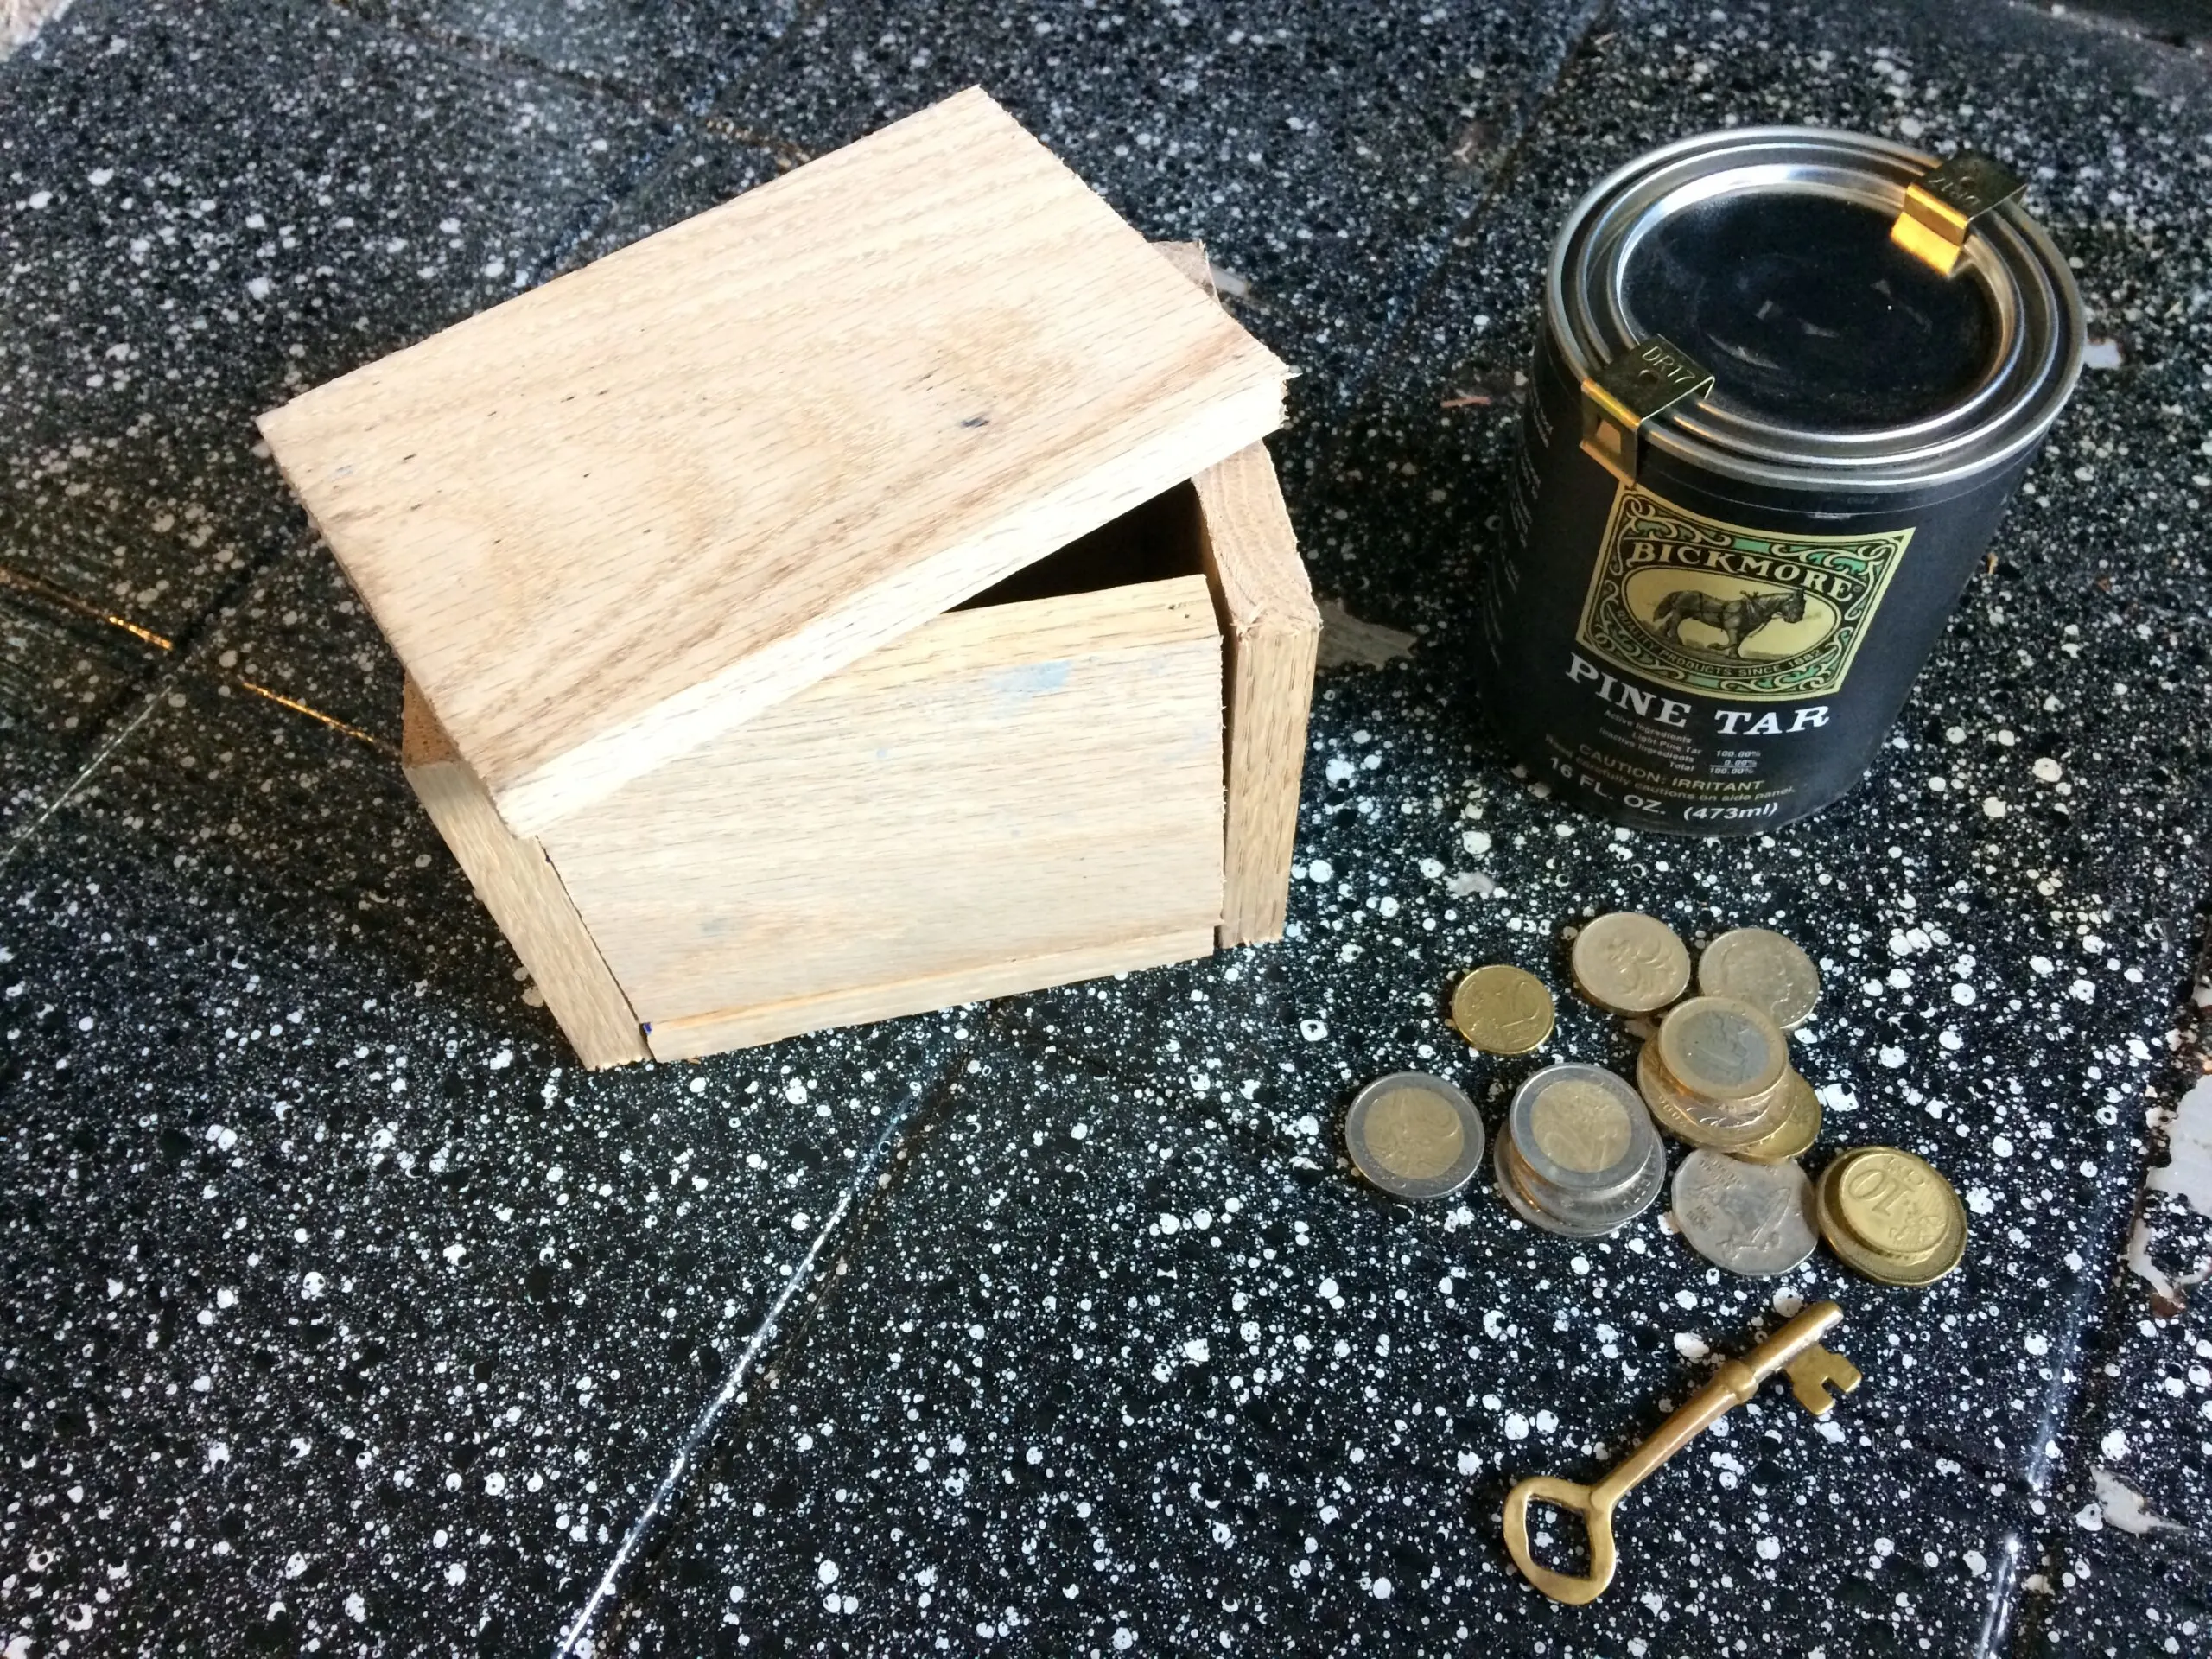 Materials to make a treasure chest